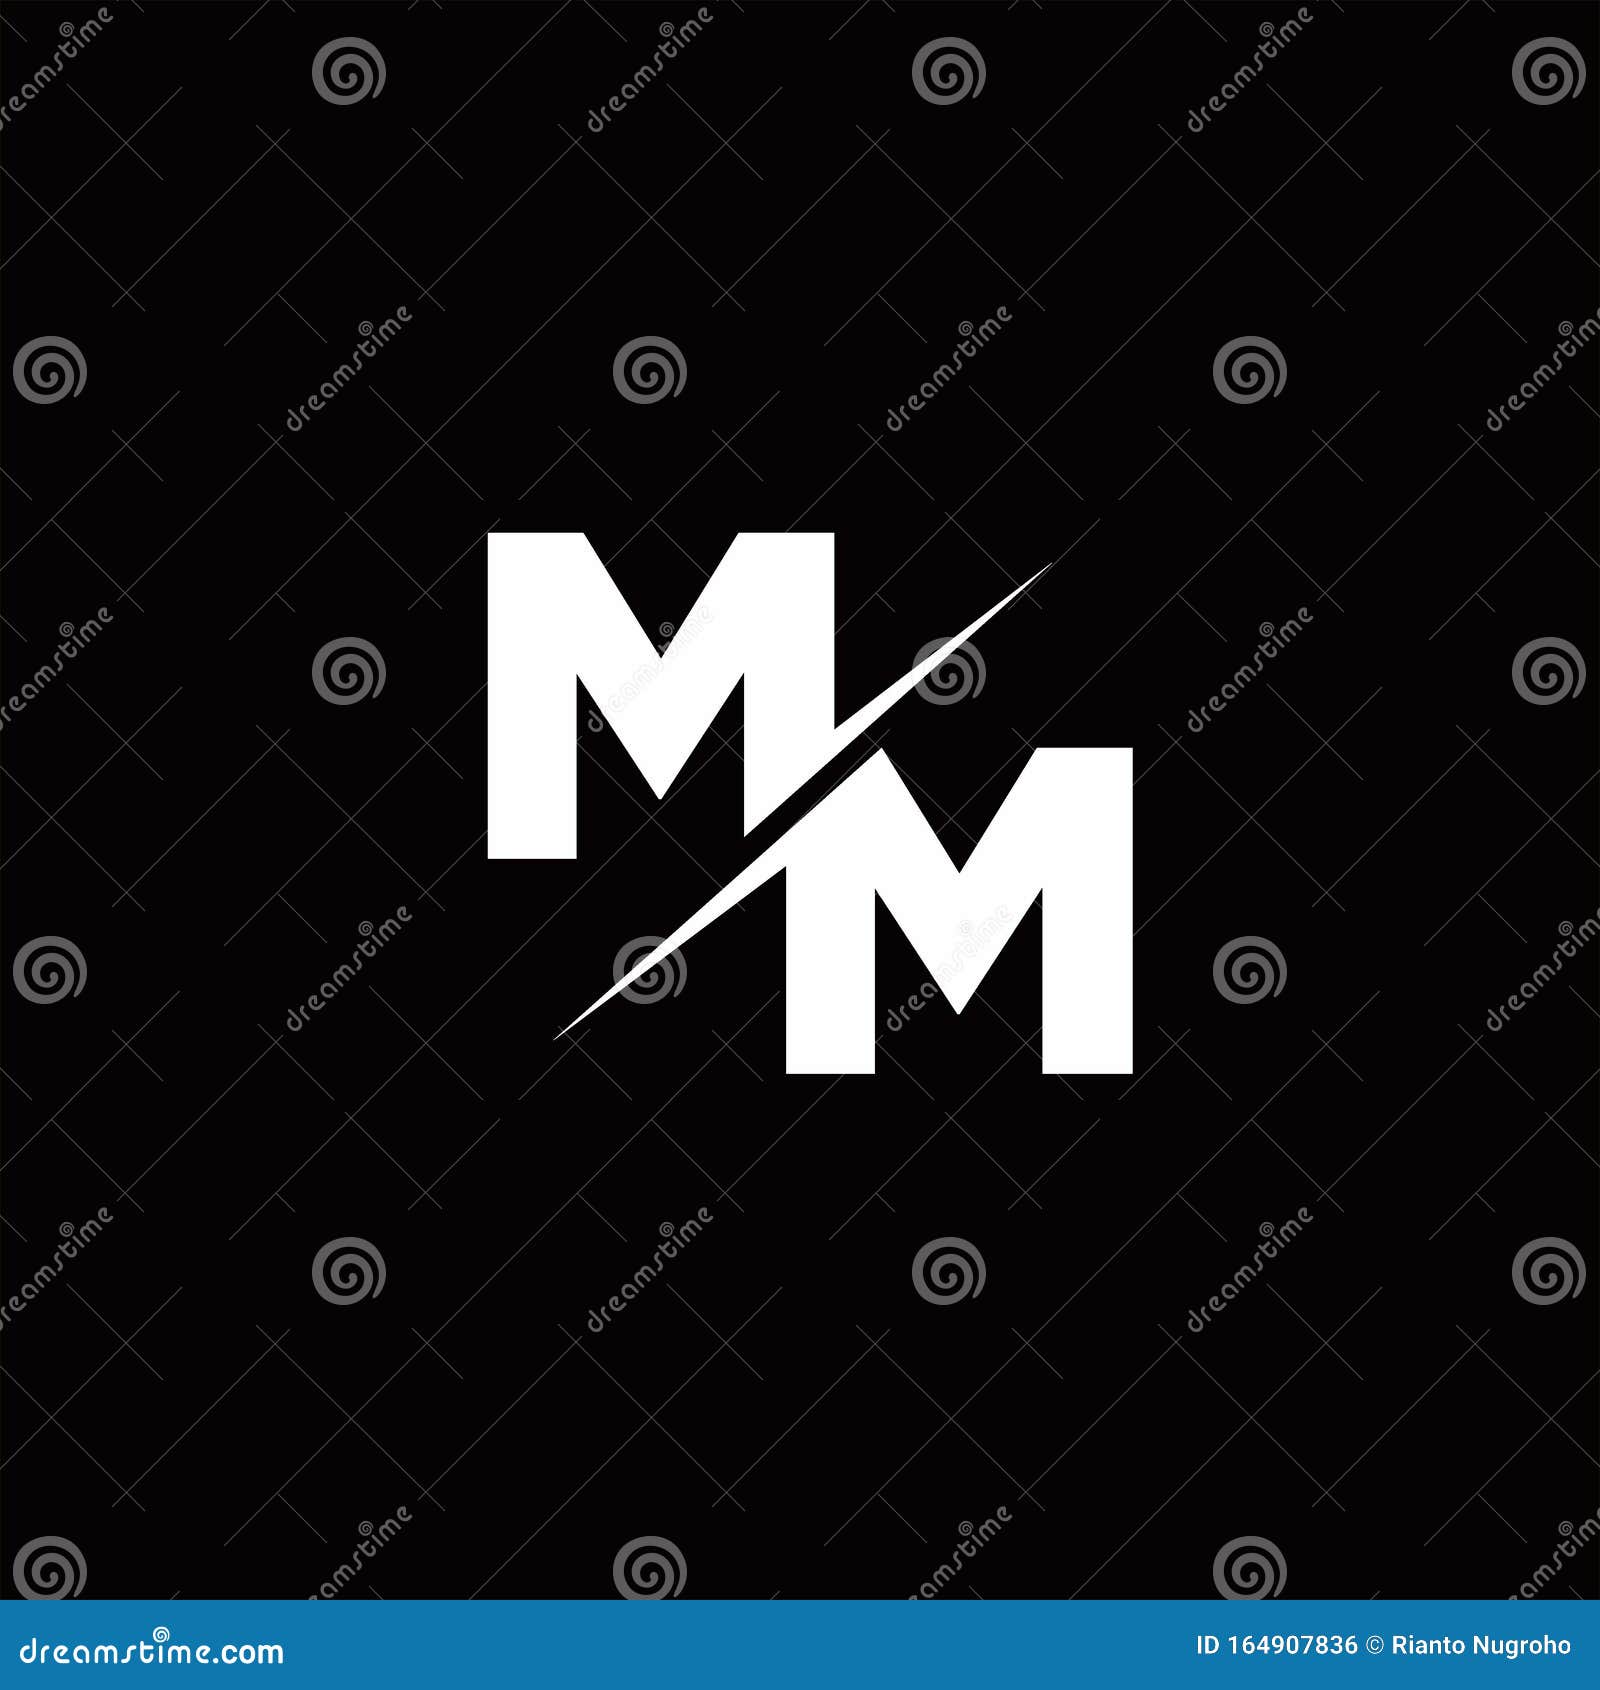 Creative initial letter mm square logo design Vector Image